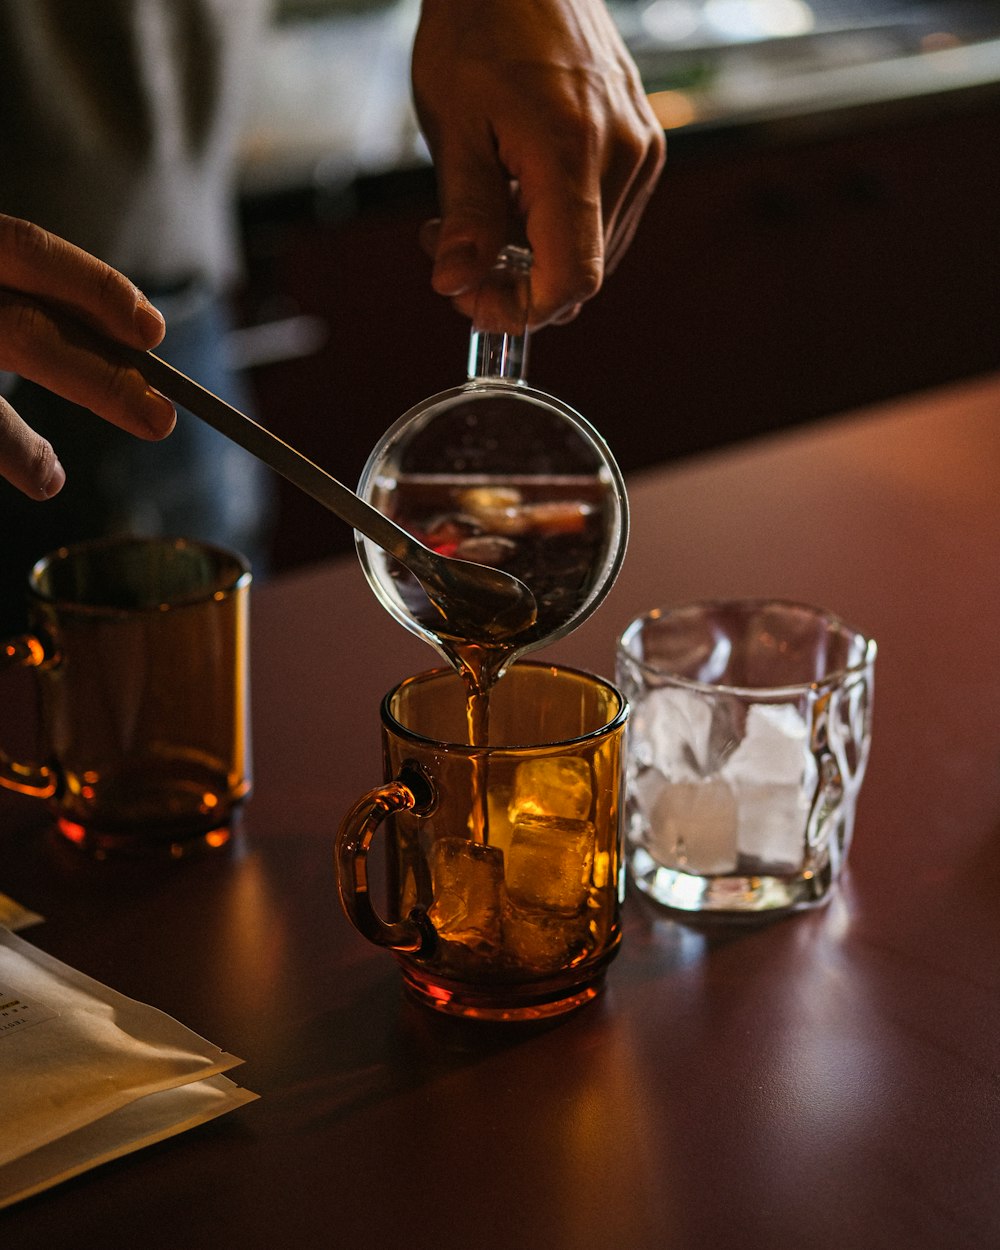 a person pours tea into a glass mug